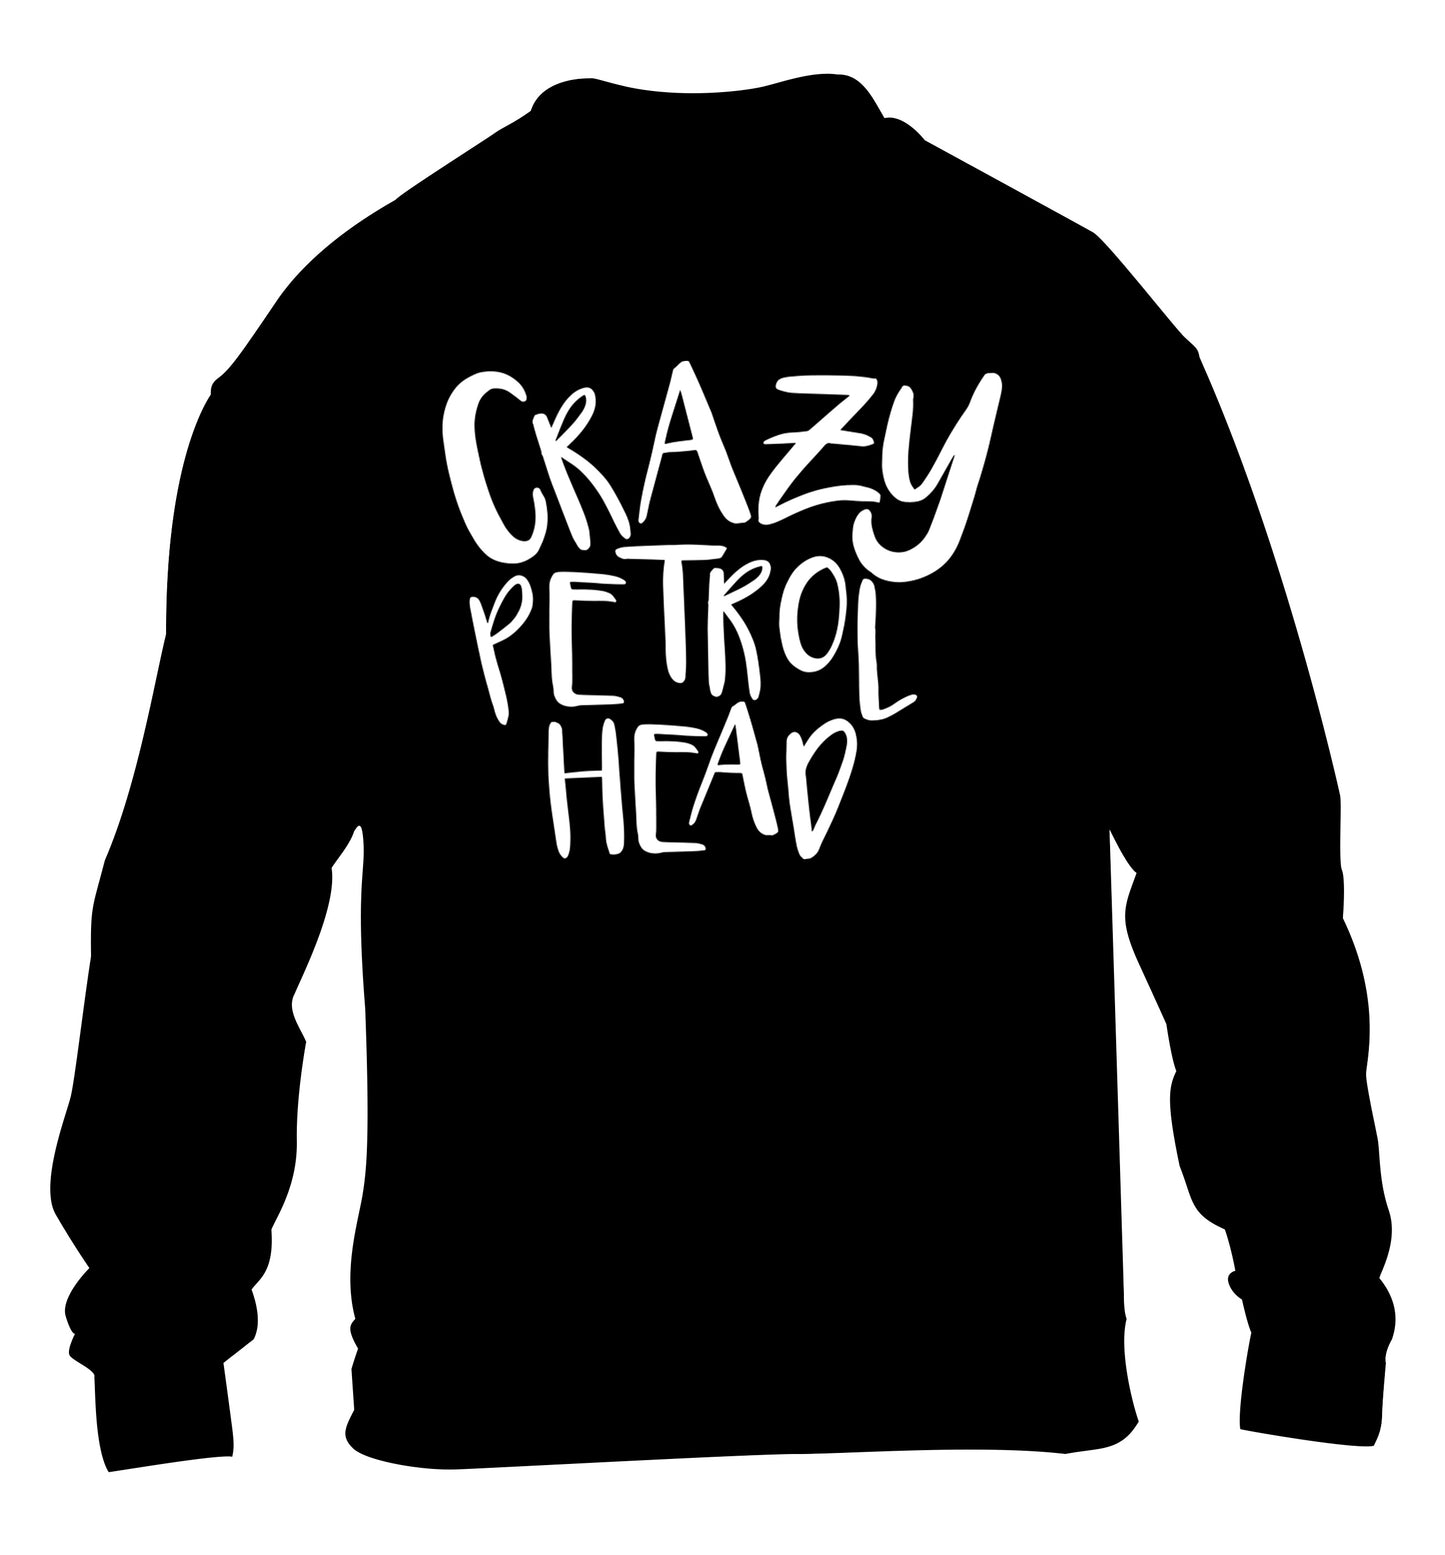 Crazy petrol head children's black sweater 12-13 Years